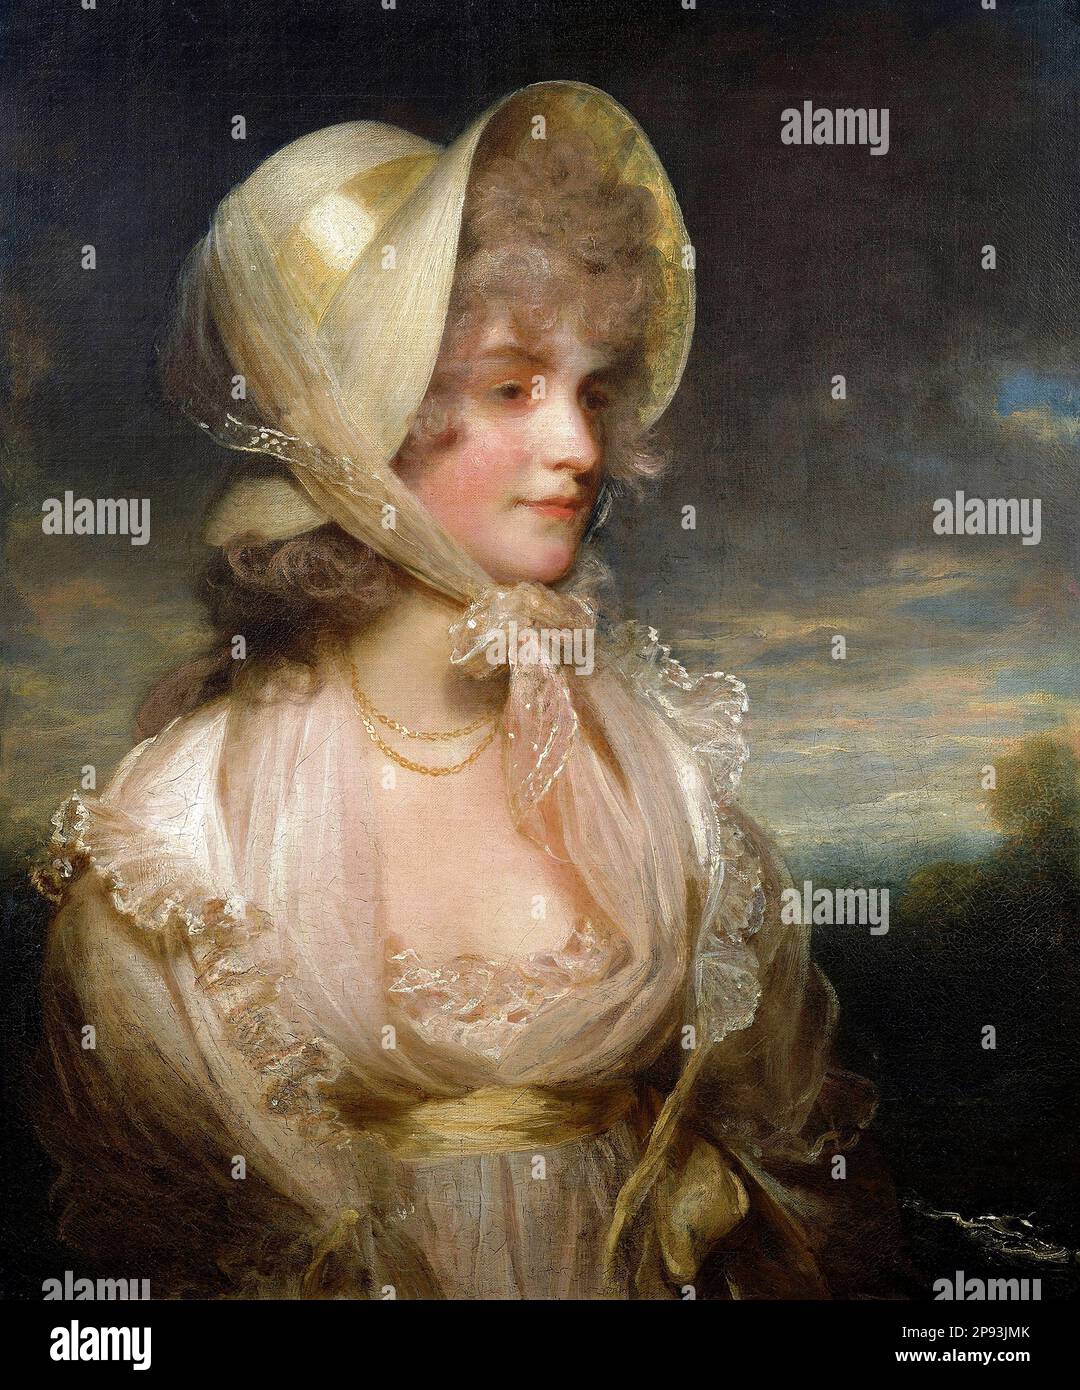 Elizabeth Sophia Baillie (geborene de Vismes) vom englischen Künstler John Hoppner (1758-1810), Öl auf Leinwand, c. 1795 Stockfoto